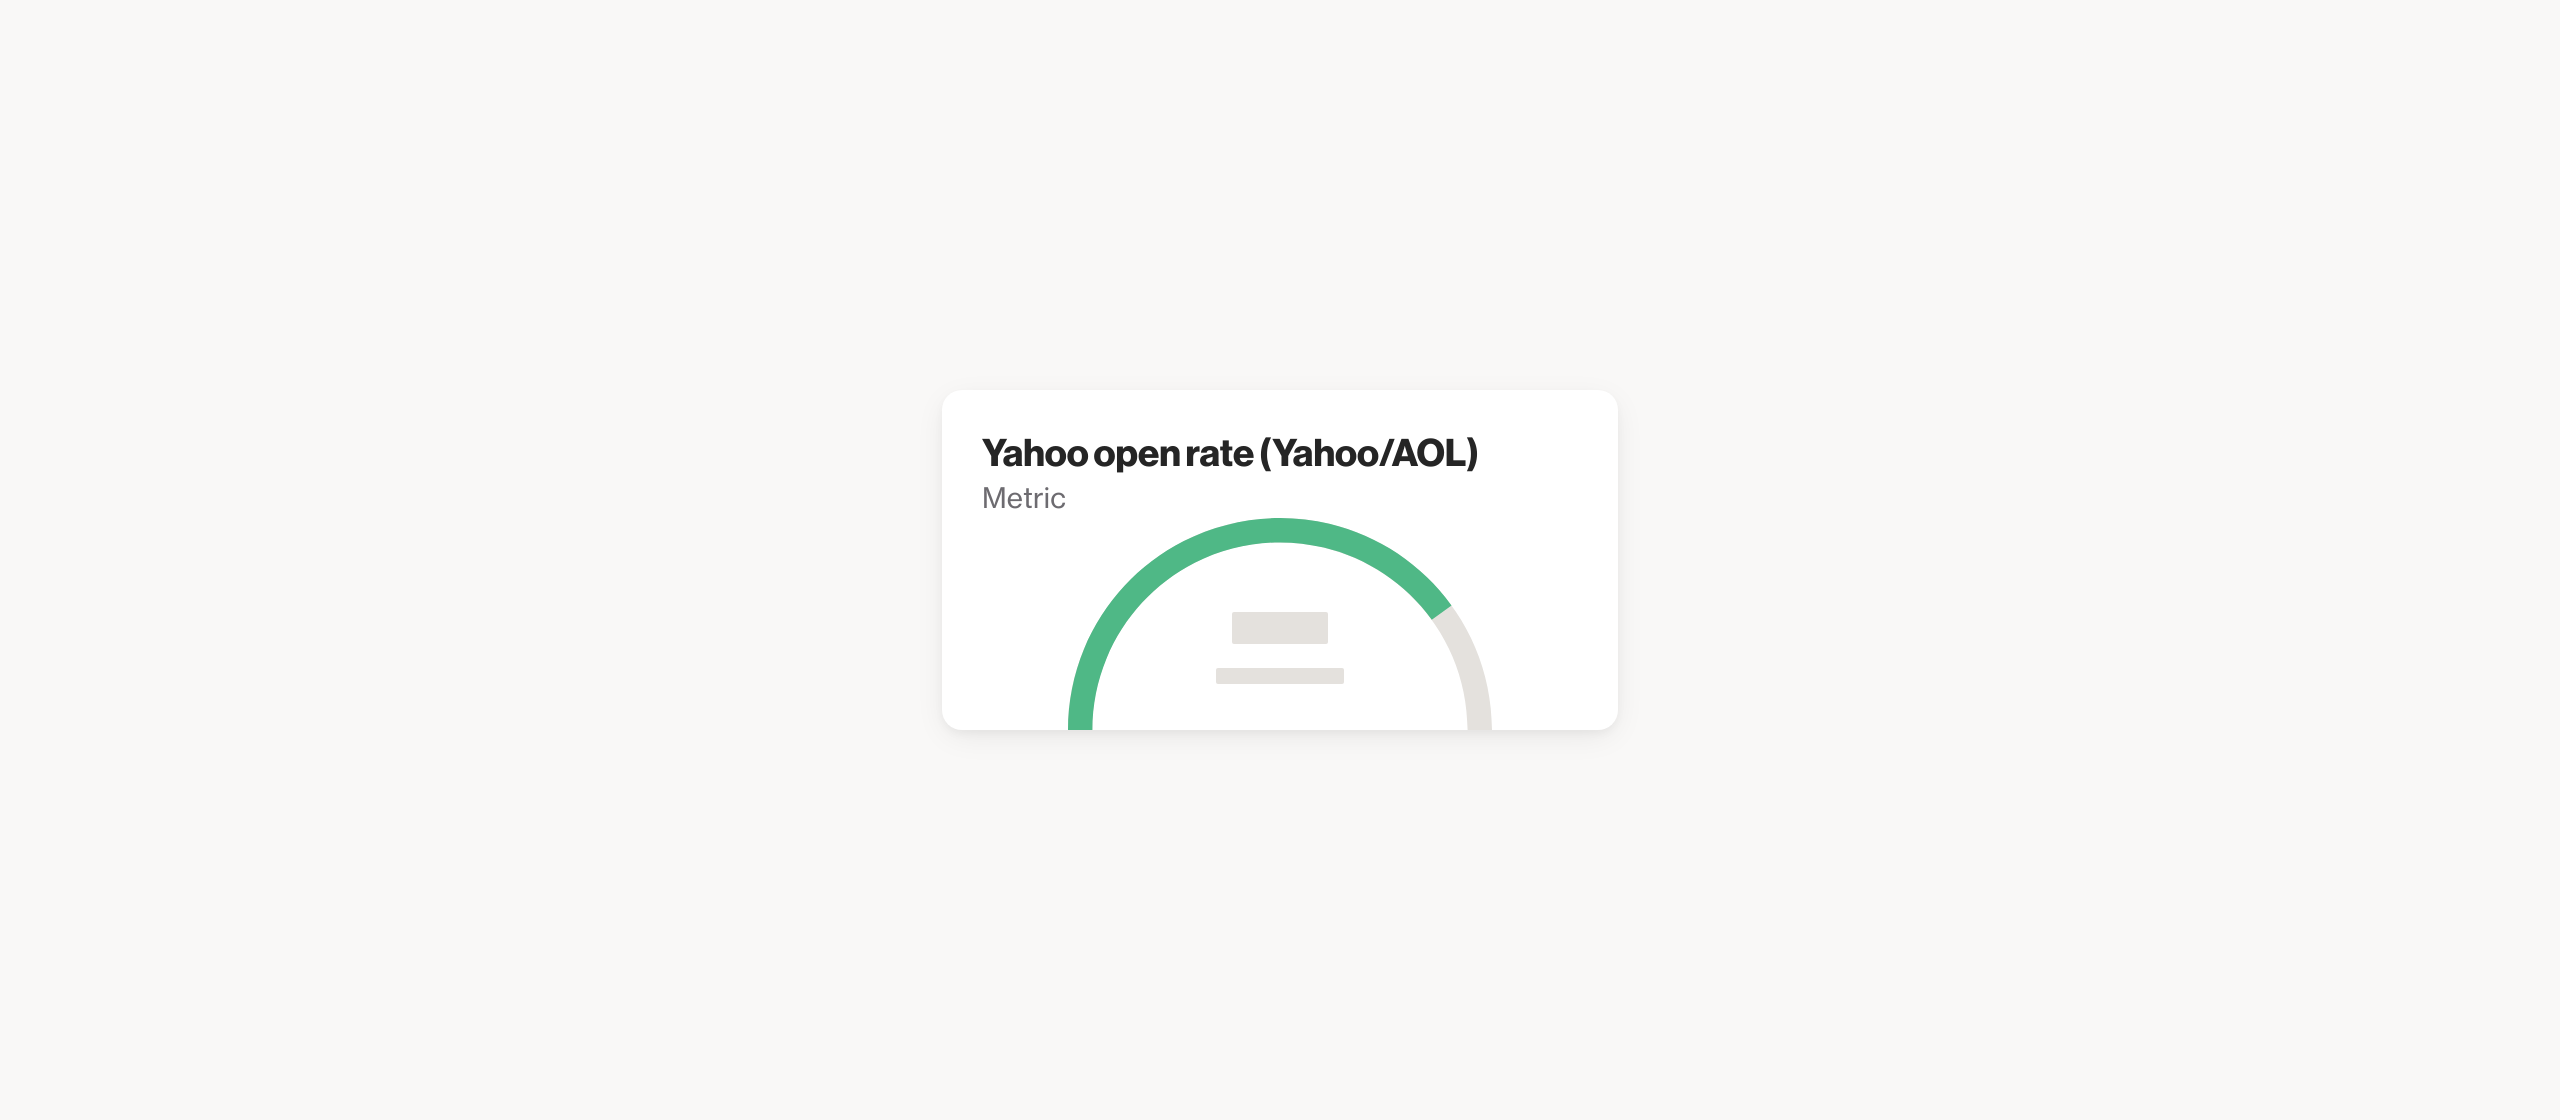 Yahoo open rate (Yahoo/AOL)